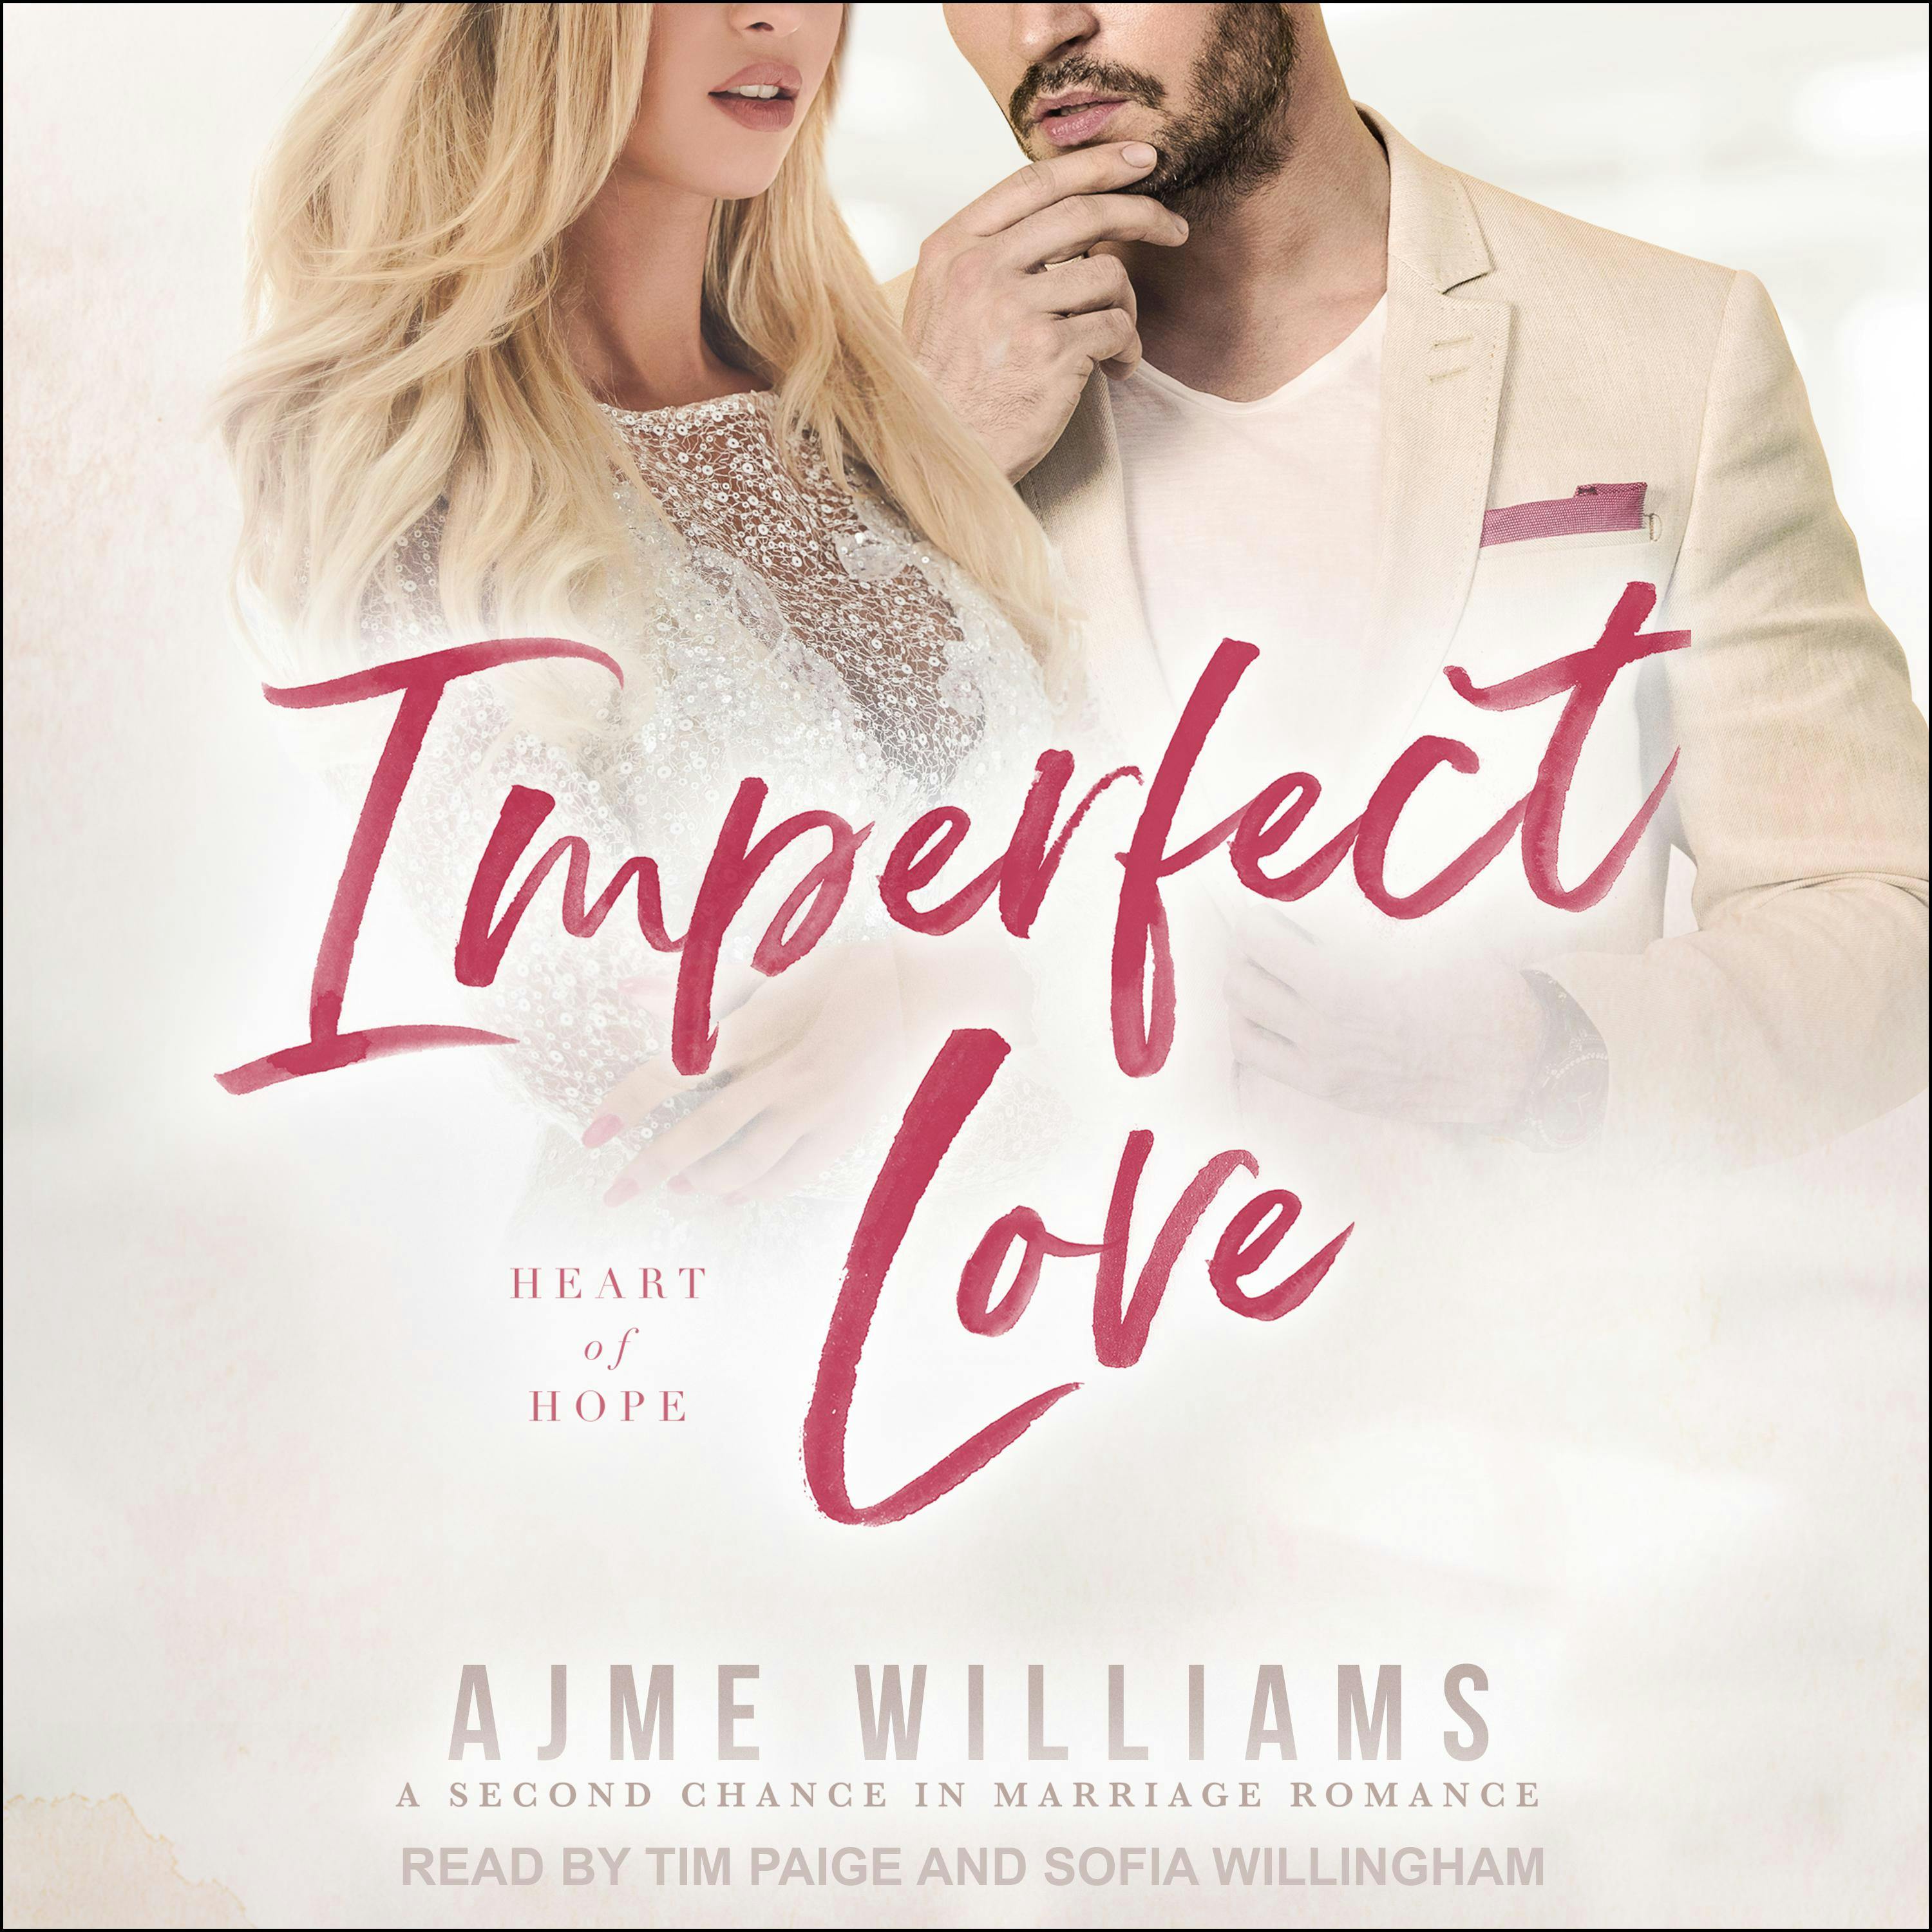 Imperfect Love - Ajme Williams